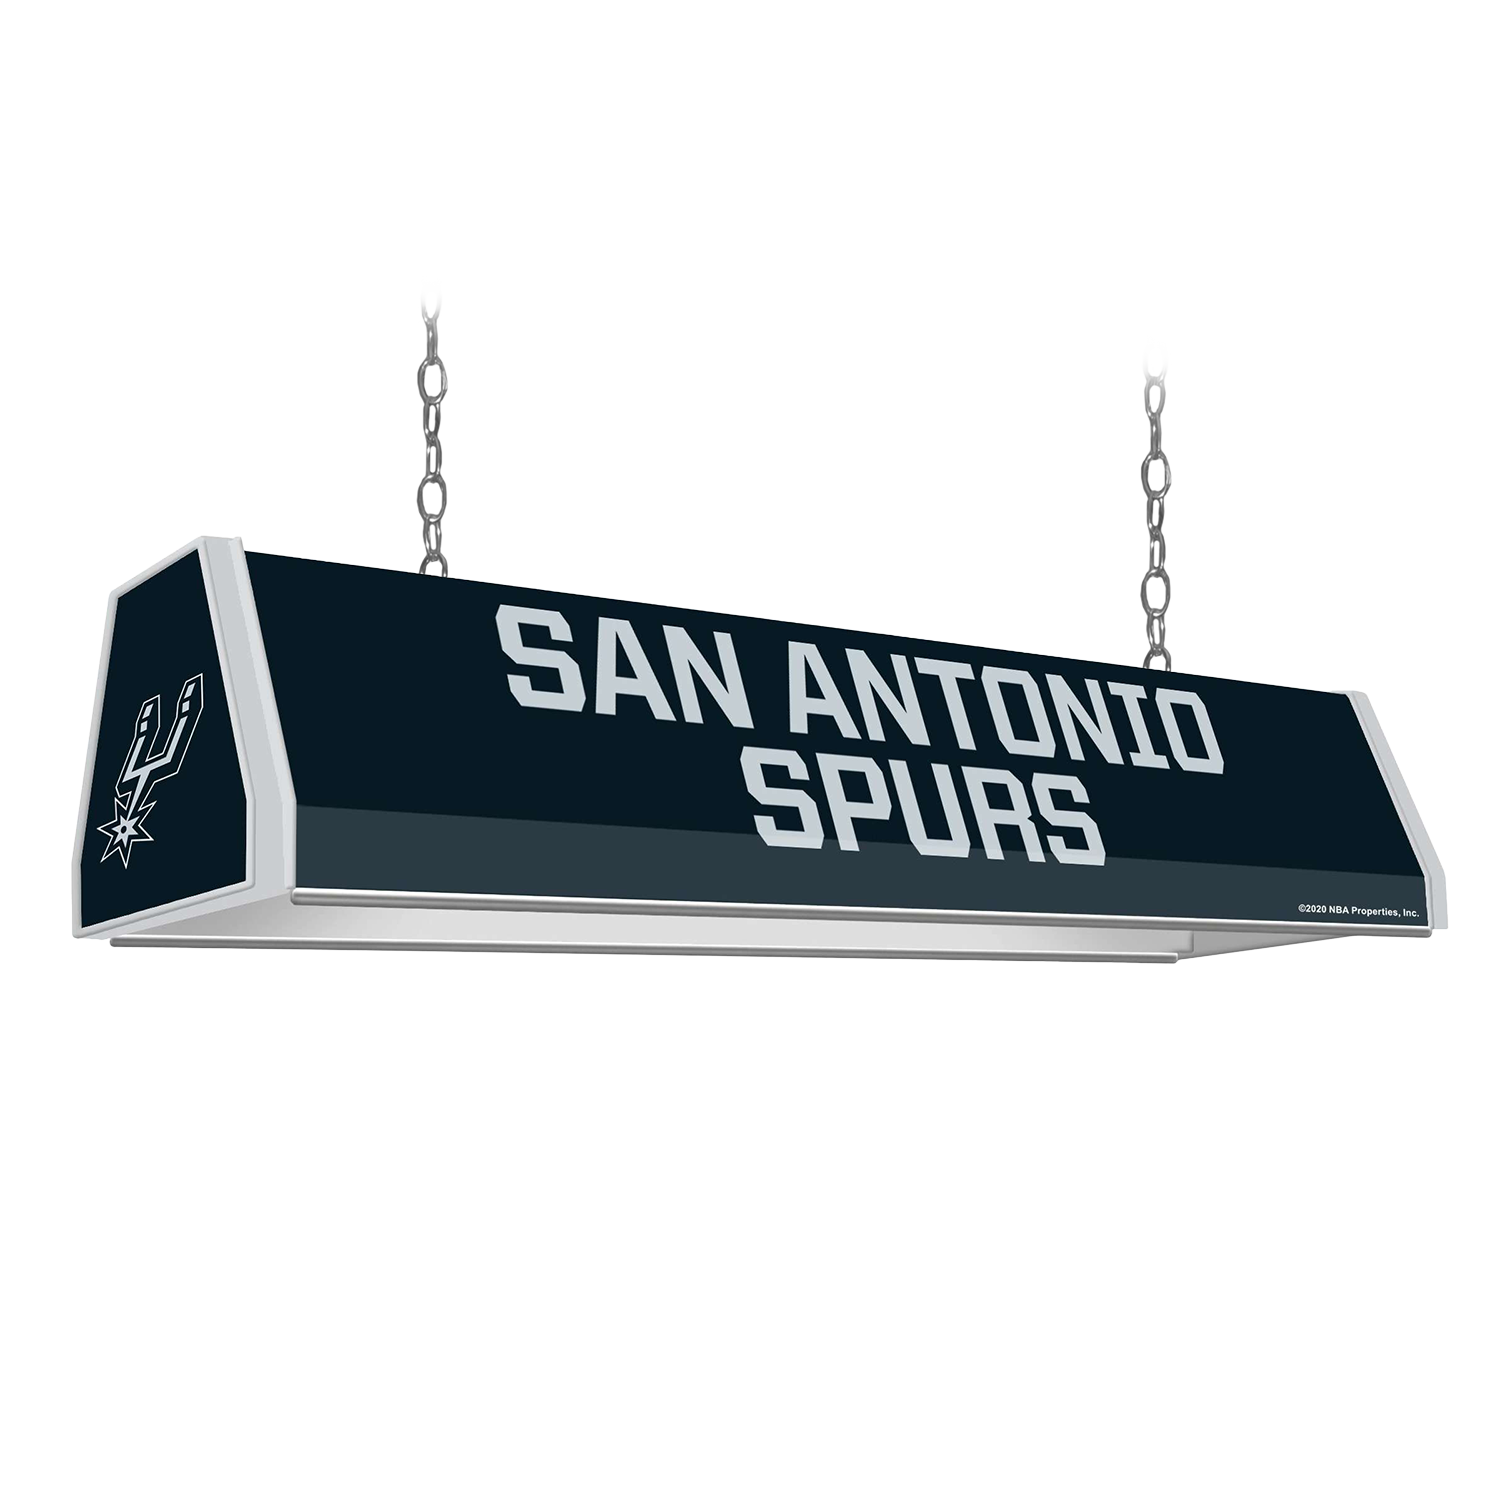 Fathead San Antonio Spurs Team Shop in NBA Fan Shop